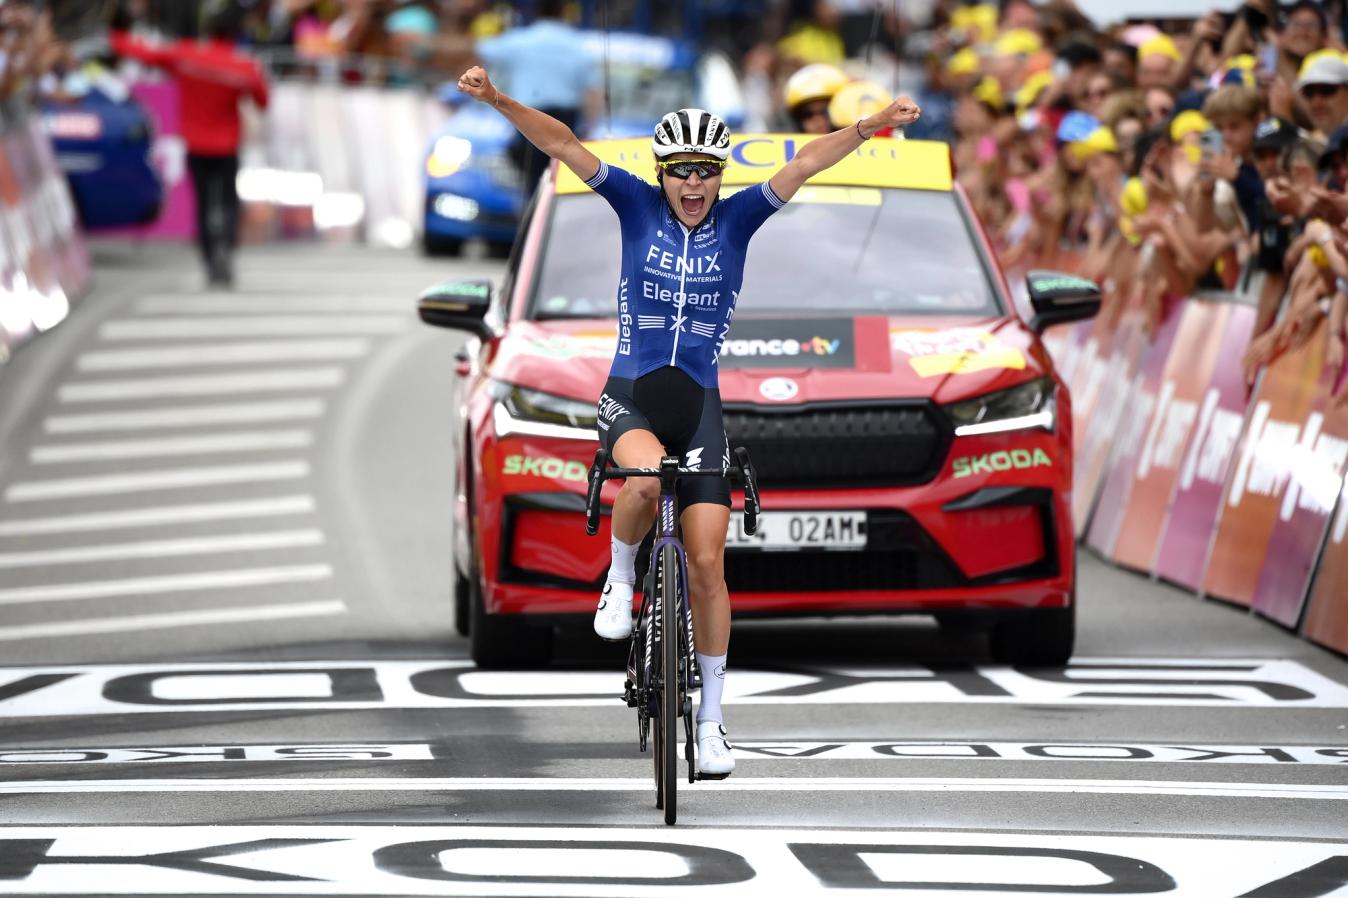 Yara Kastelijn won stage 4 of the Tour de France Femmes atop the Canyon Ultimate